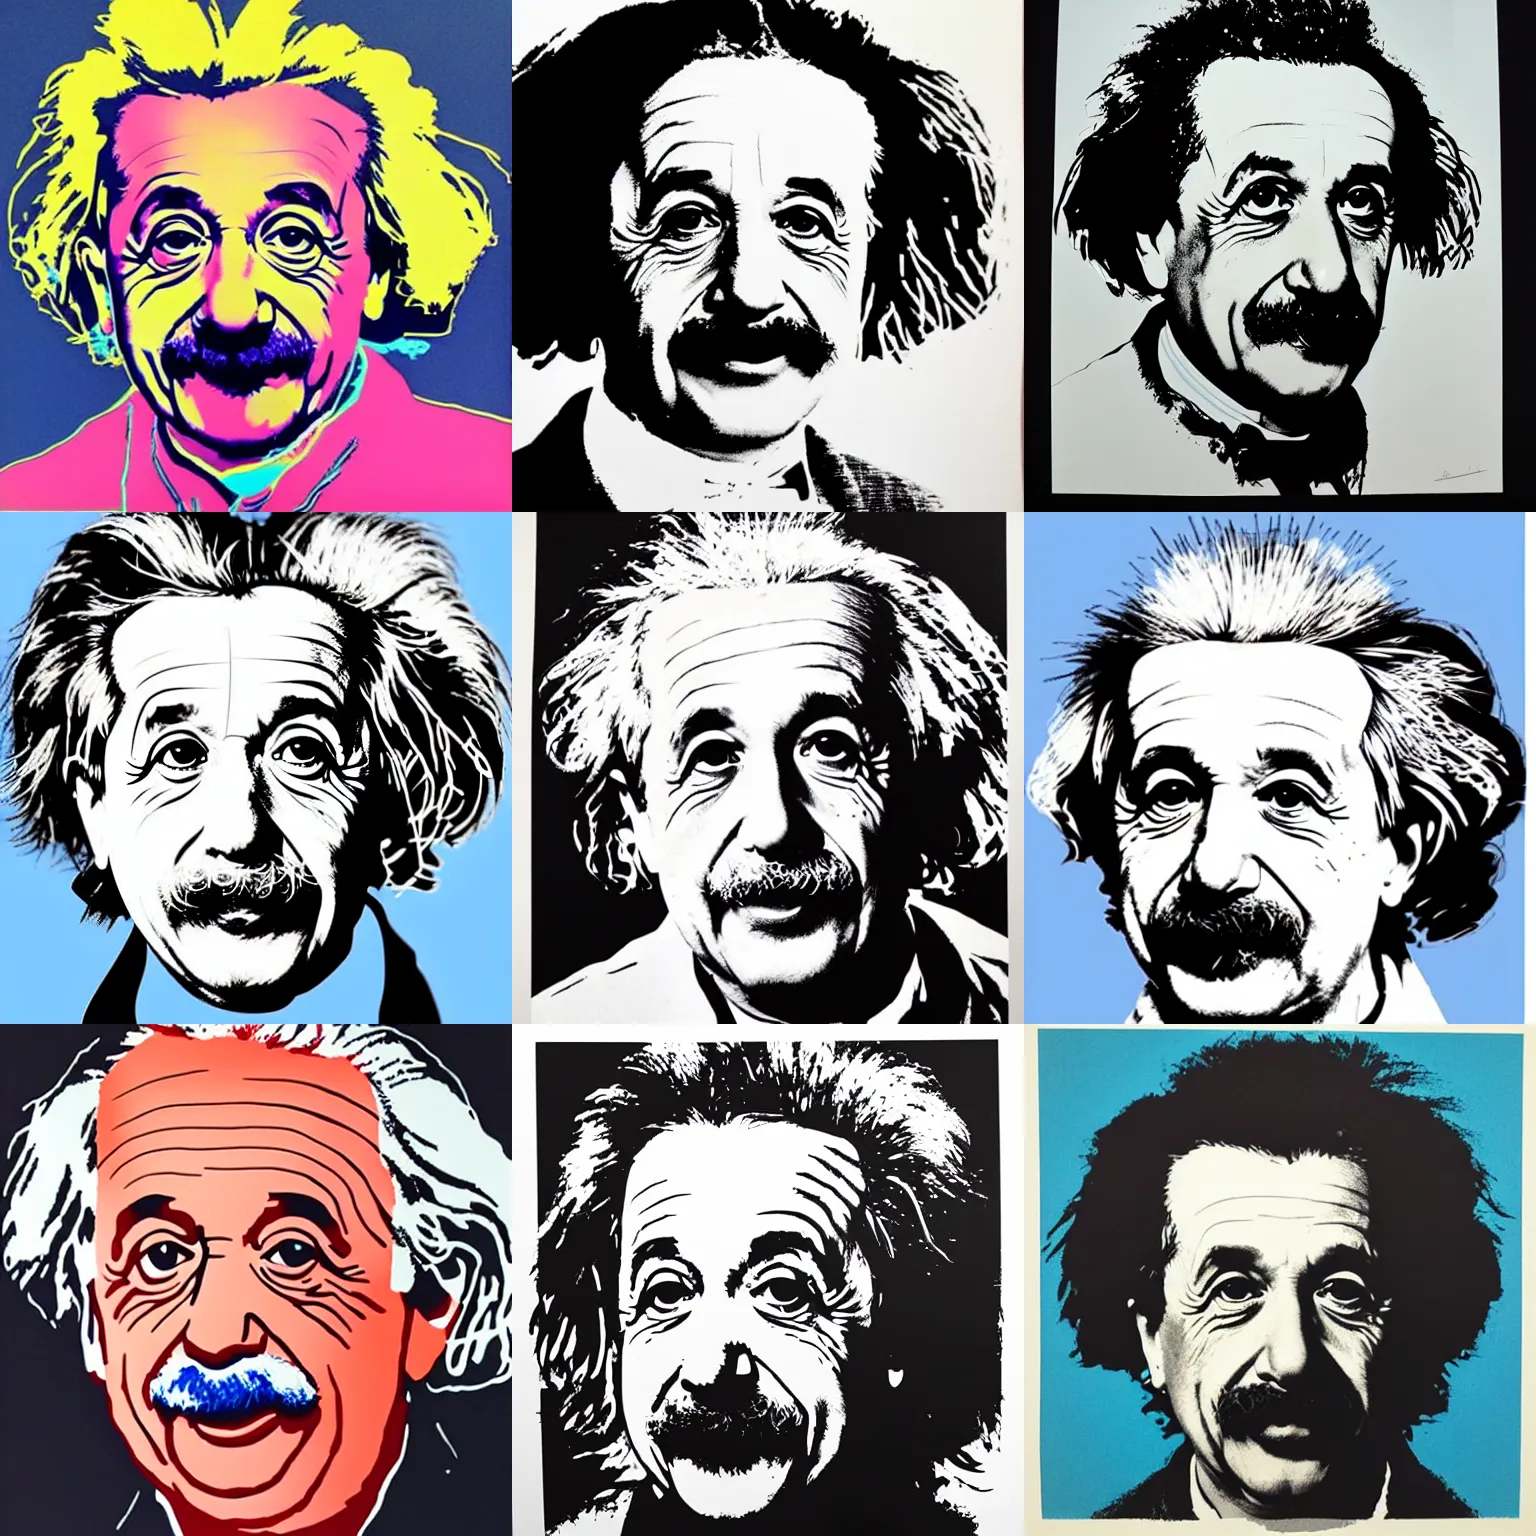 Prompt: “portrait of Albert Einstein by Andy Warhol, screen print”